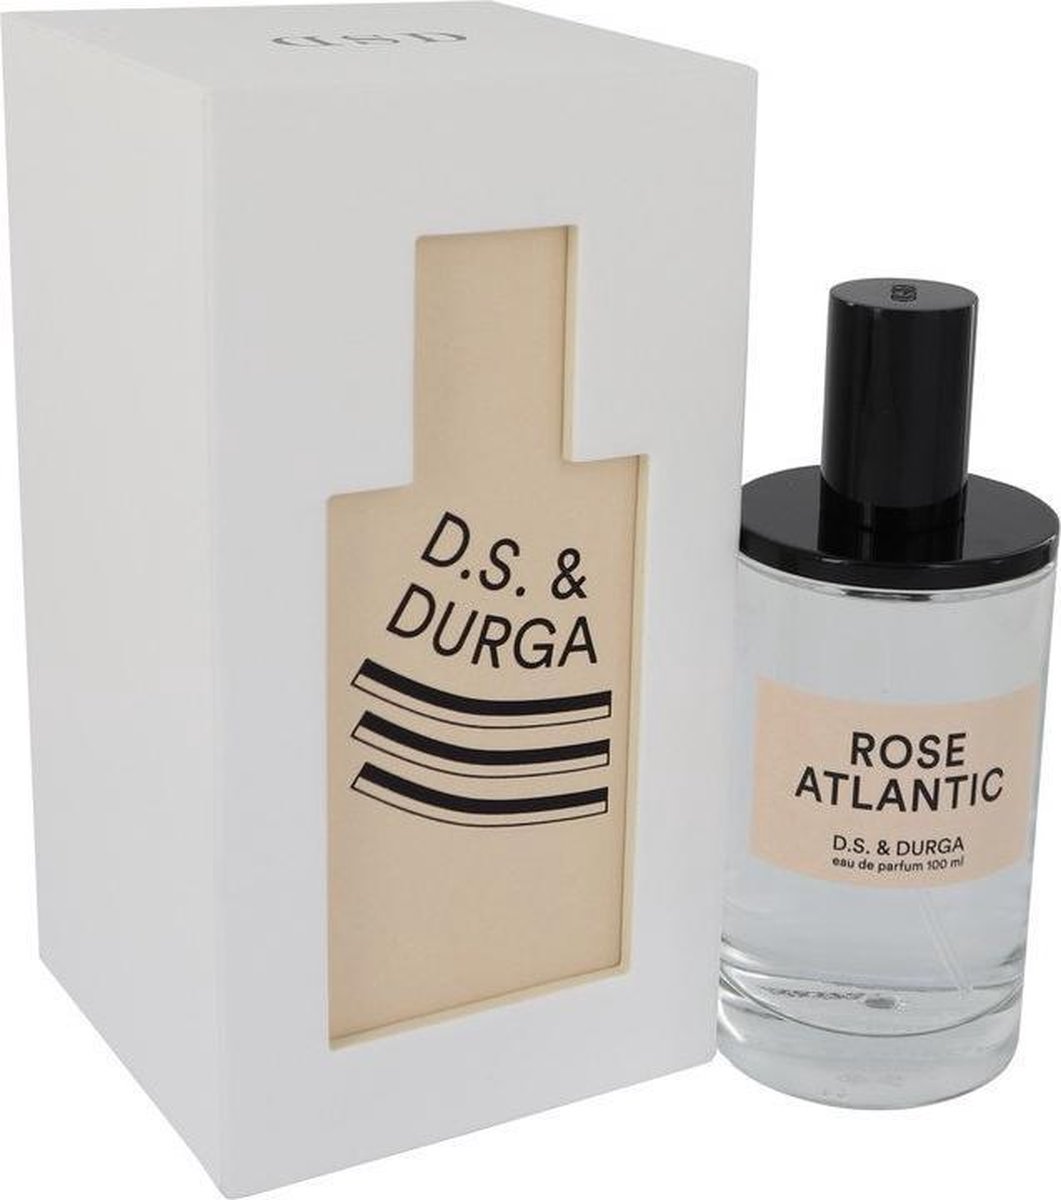 D.S. & Durga Rose Atlantic eau de parfum spray 100 ml